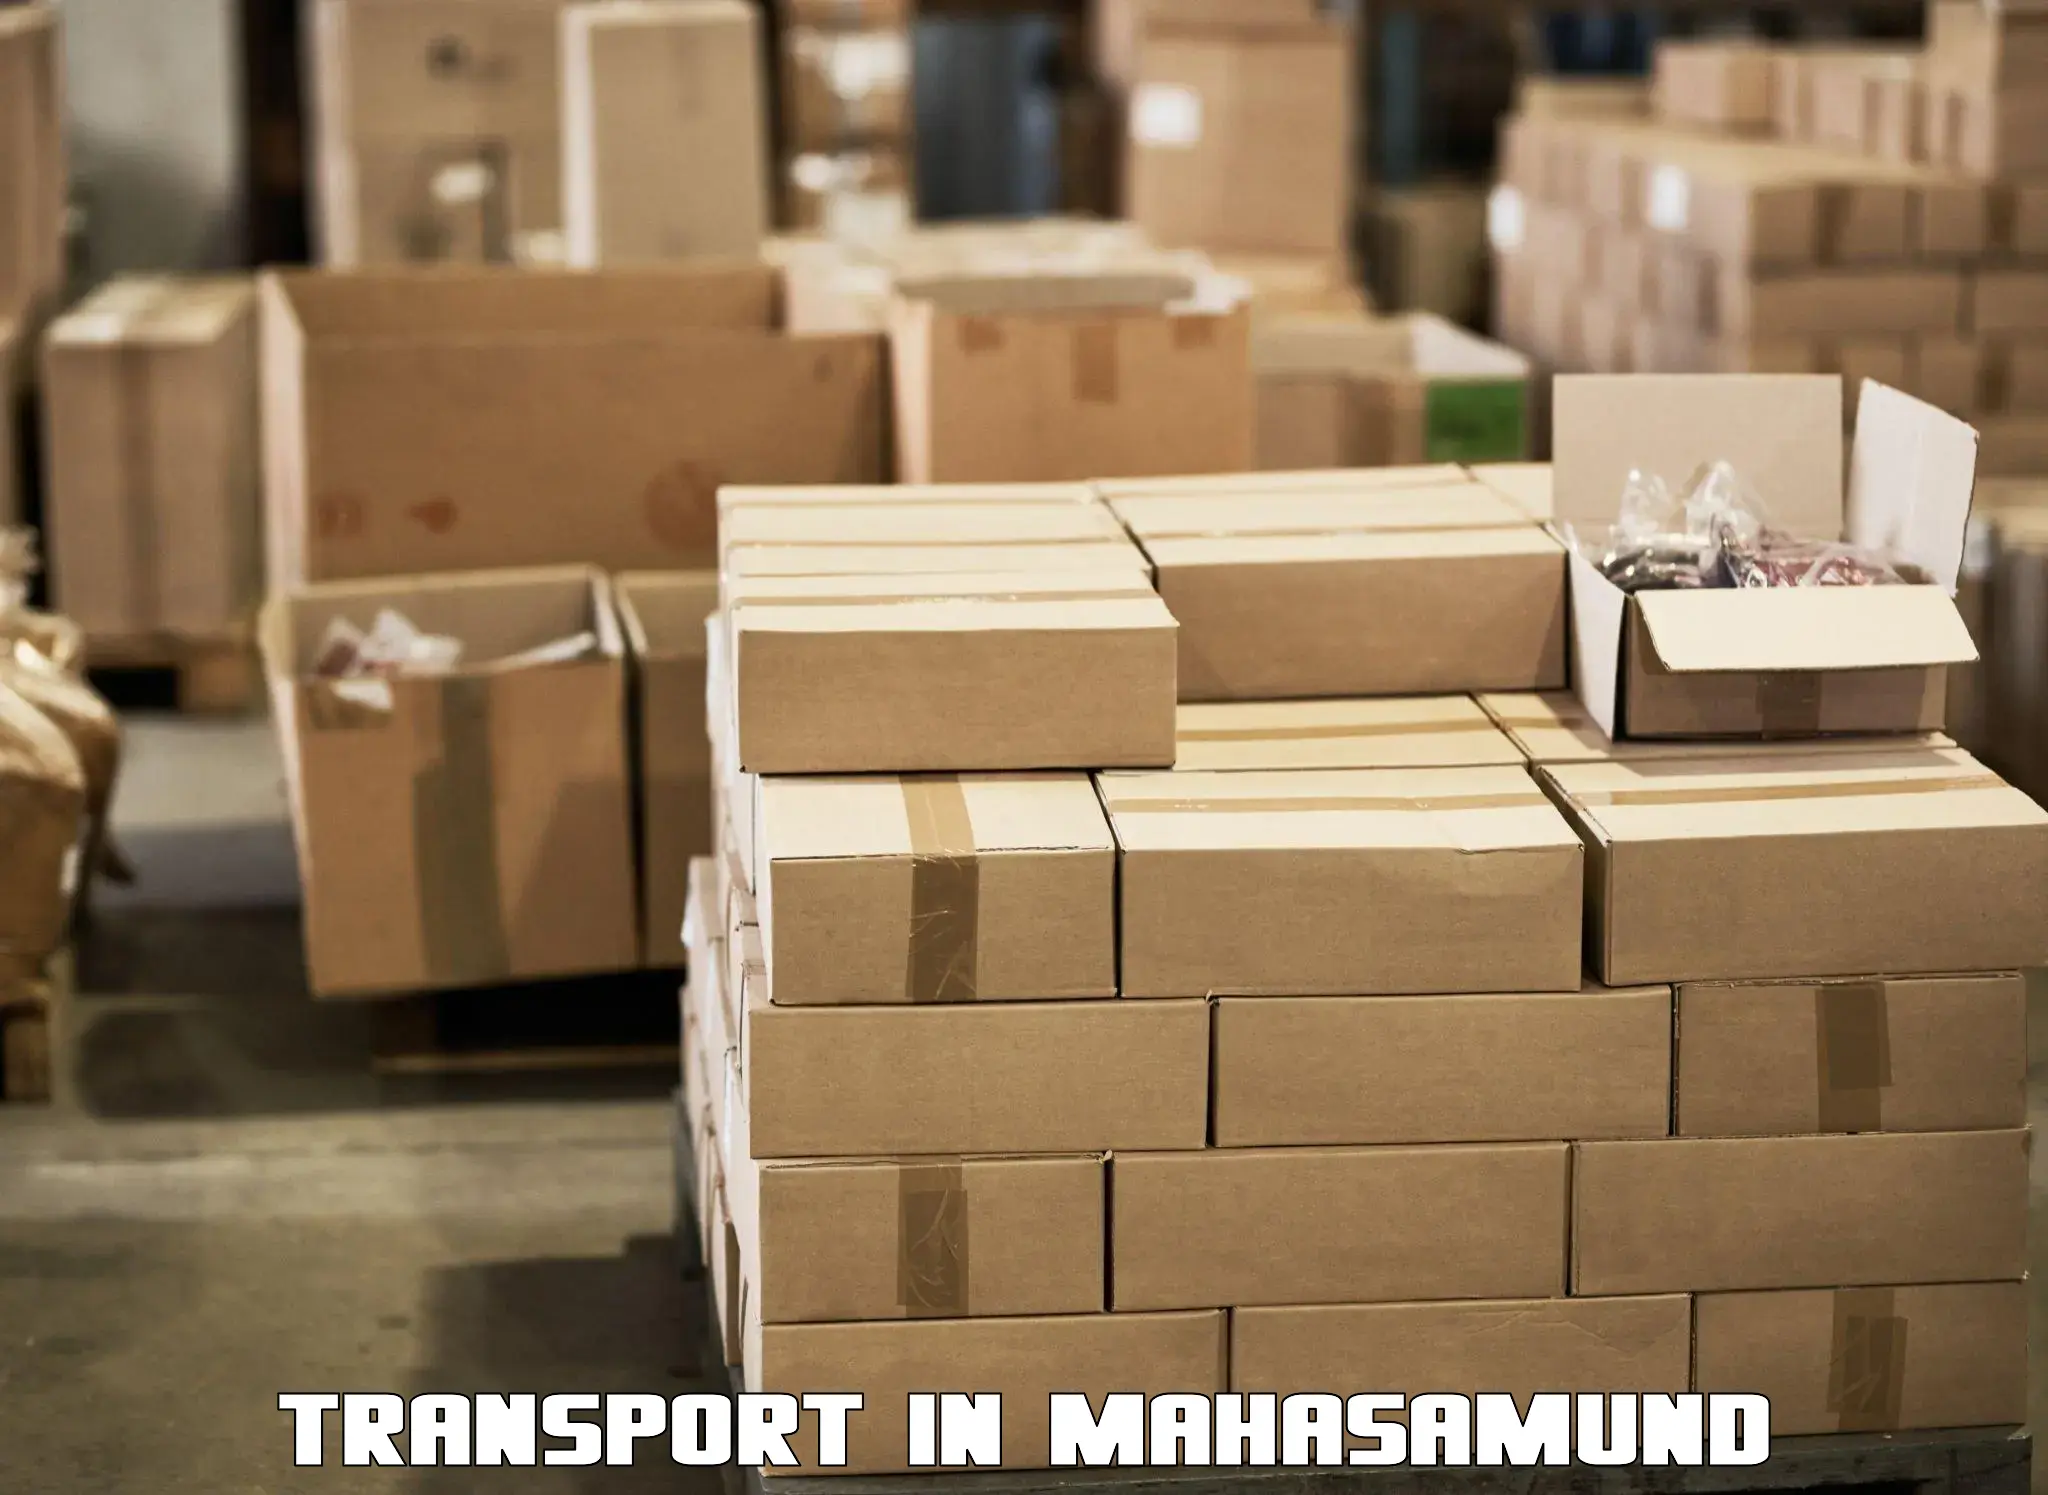 Truck transport companies in India in Mahasamund